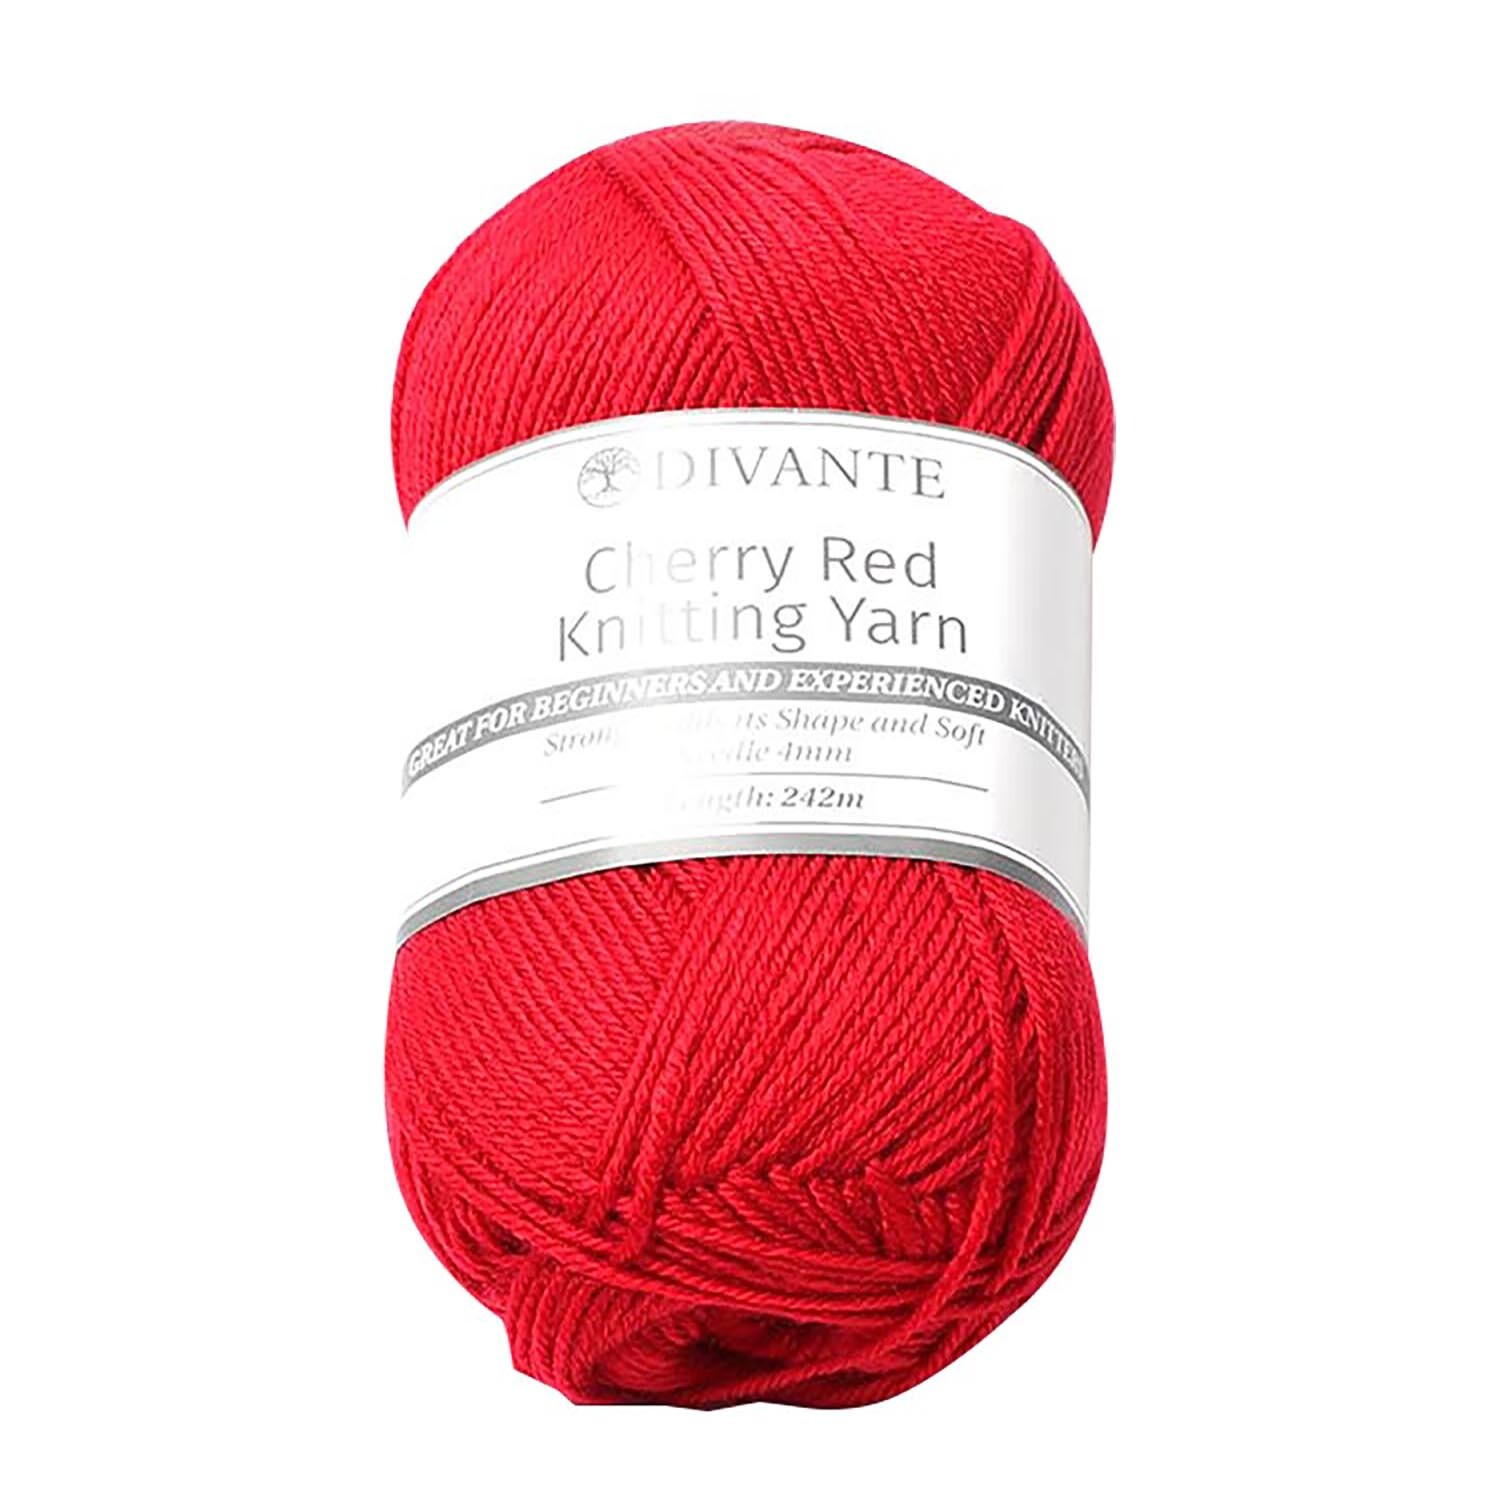 Divante Basic Knitting Yarn - Cherry Red Image